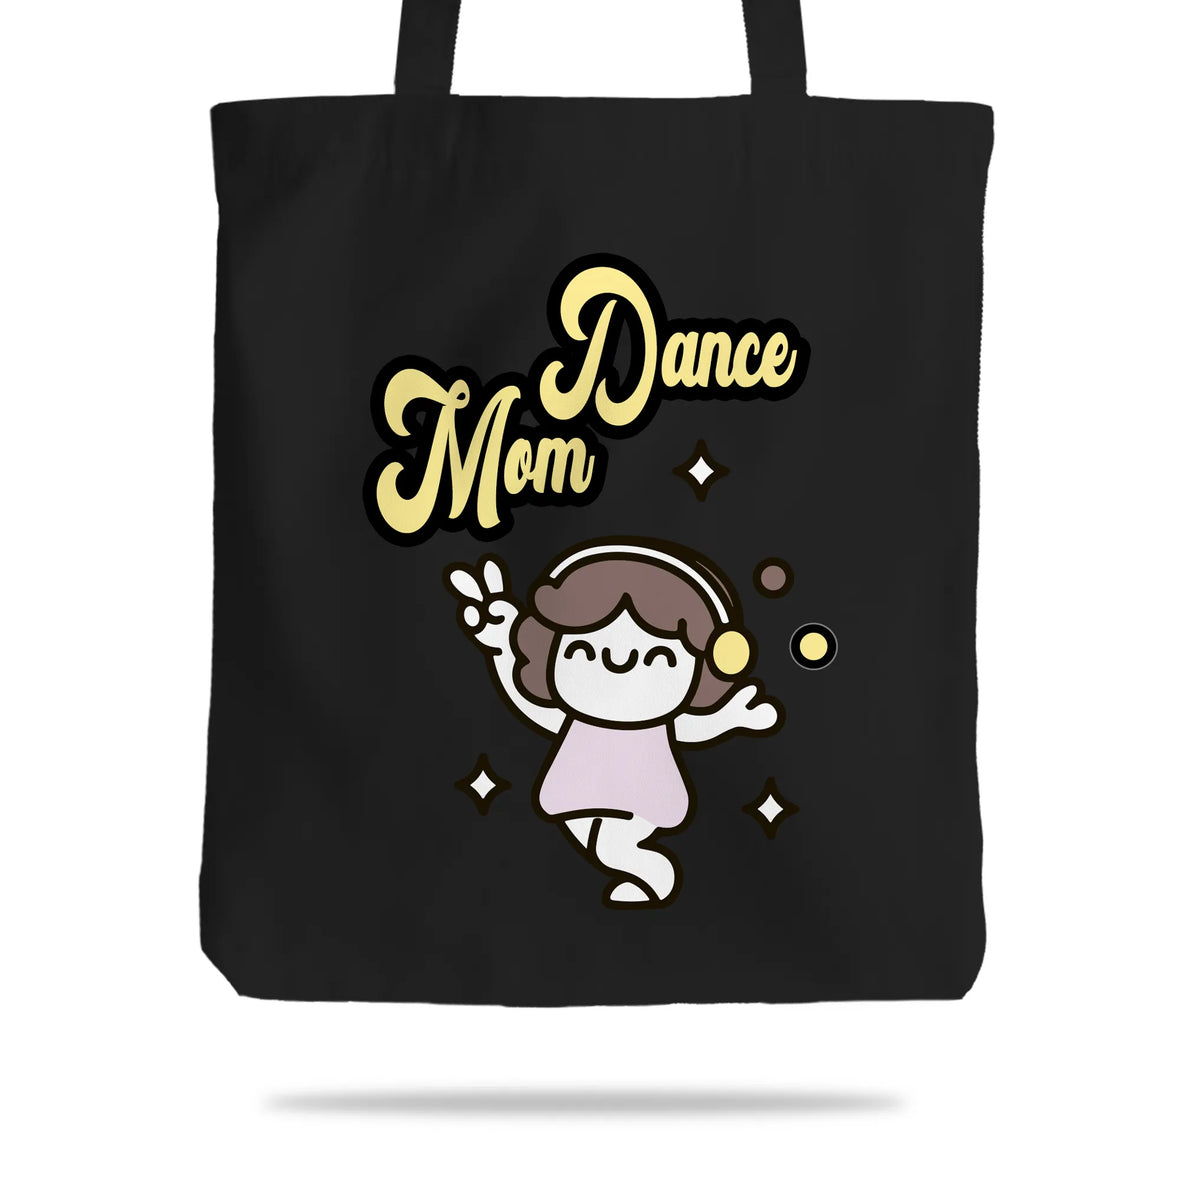 Dance mom tote bag